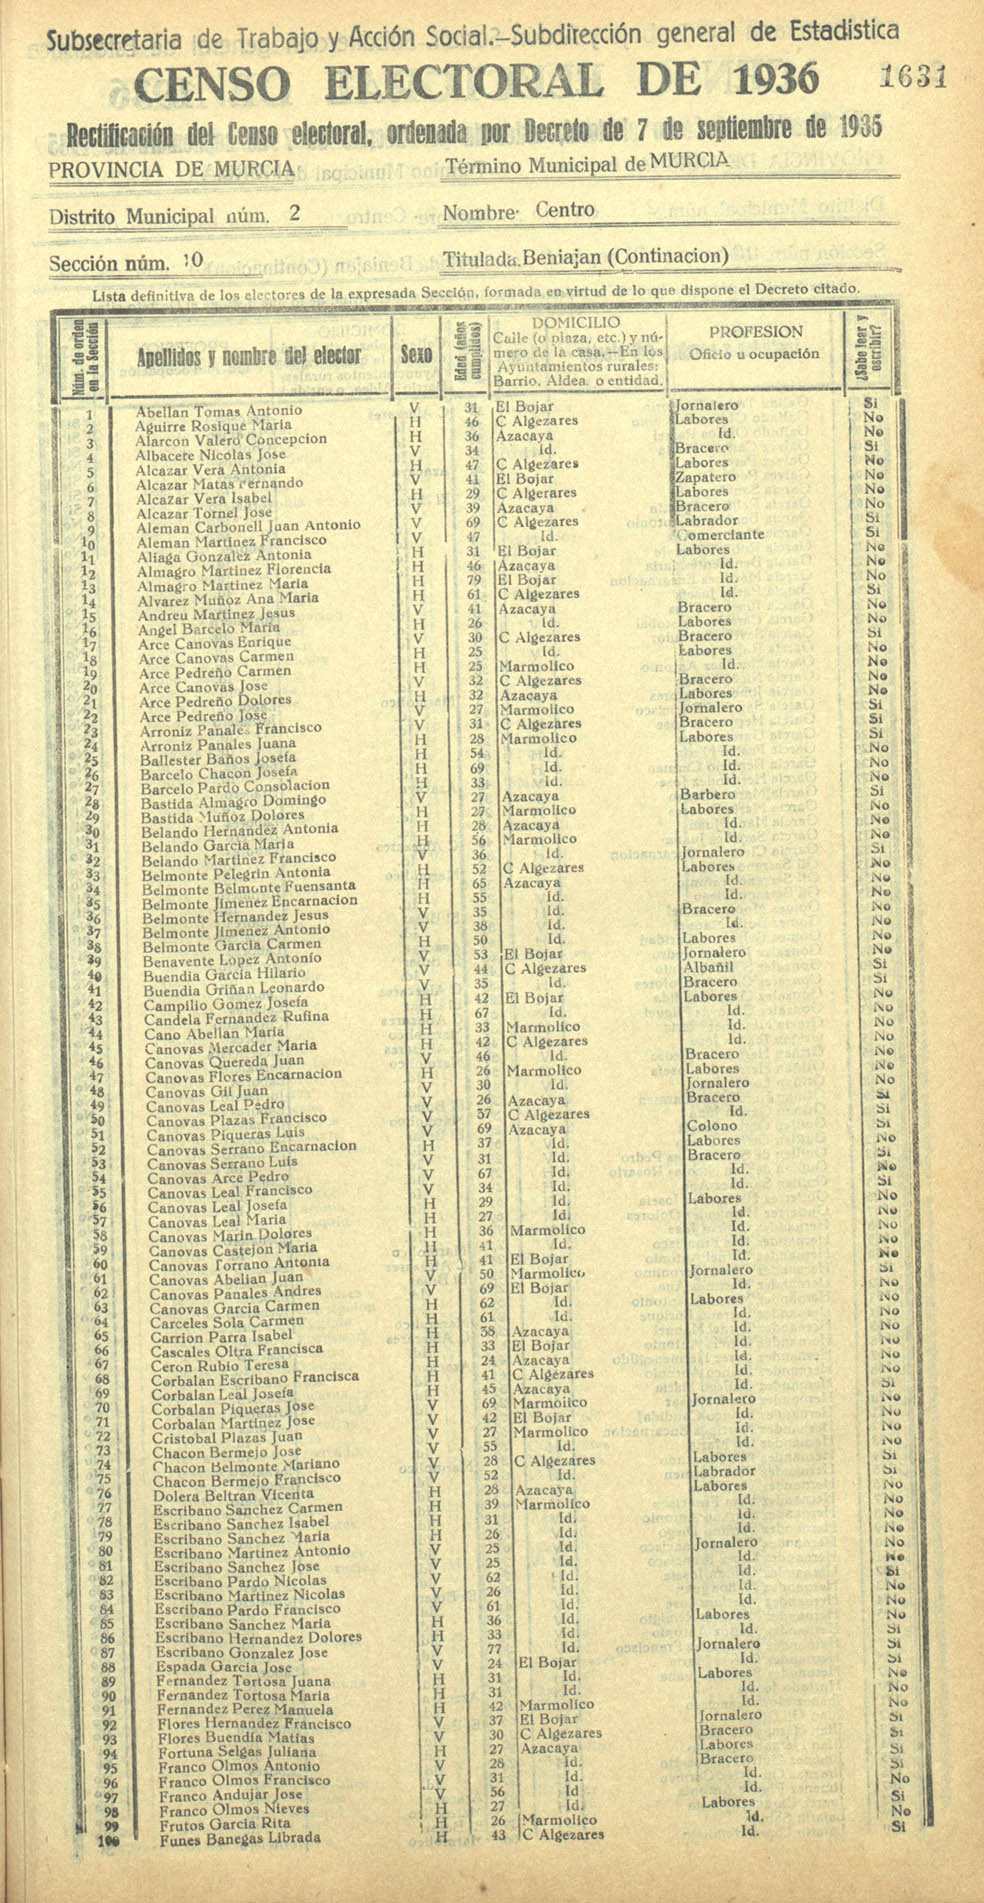 Censo electoral provincial de 1936. Murcia. Distrito 2º, Centro. Sección 10ª, Beniaján (continuación)